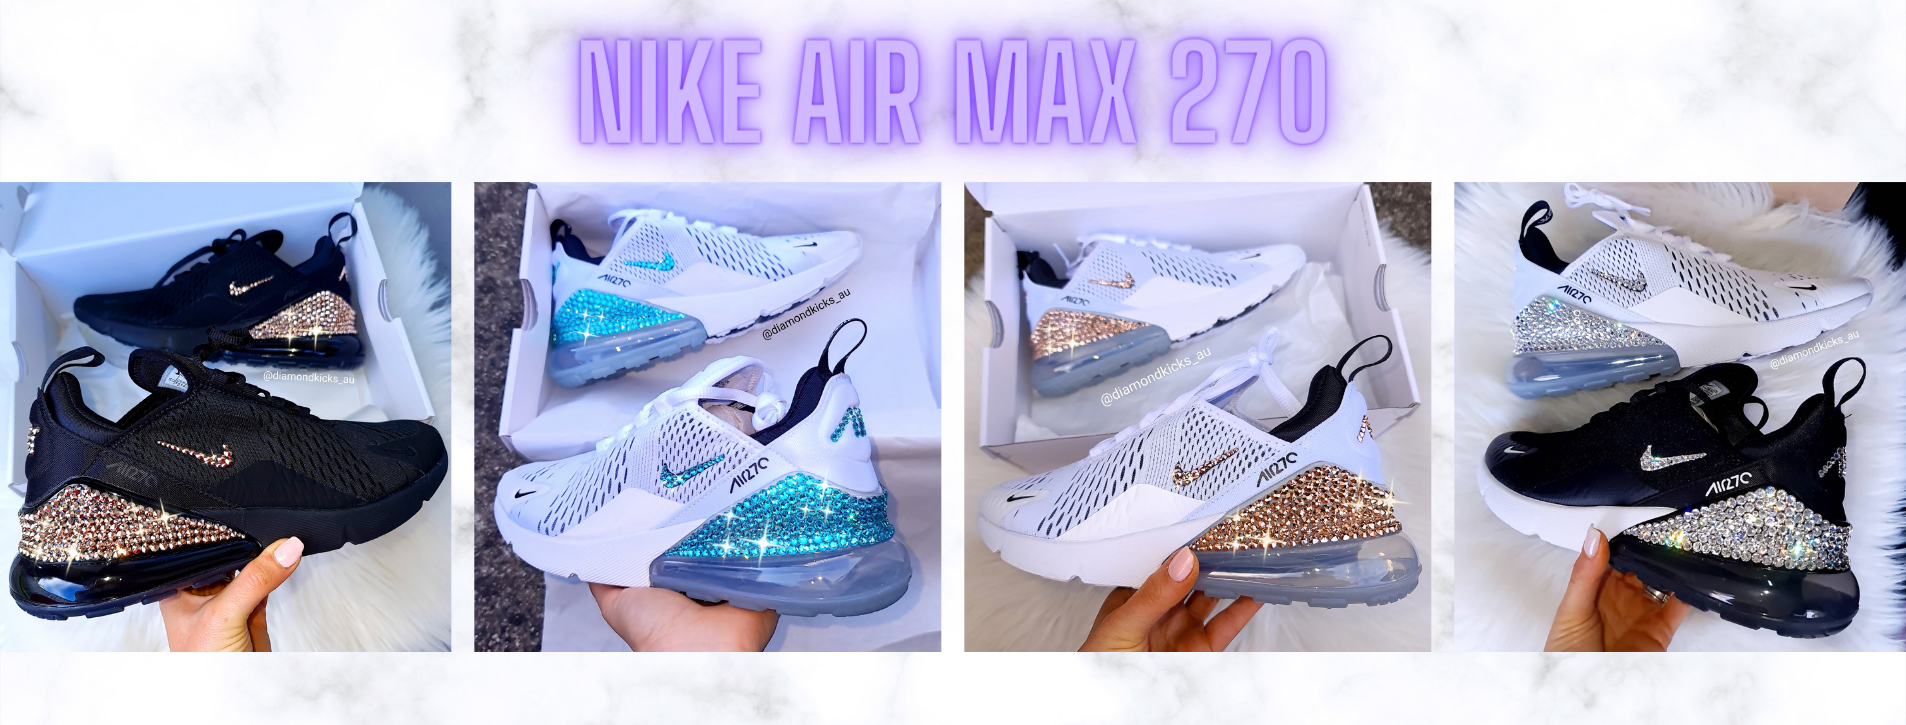 New Limited Edition Air Max 270 Colour! - Diamond Kicks